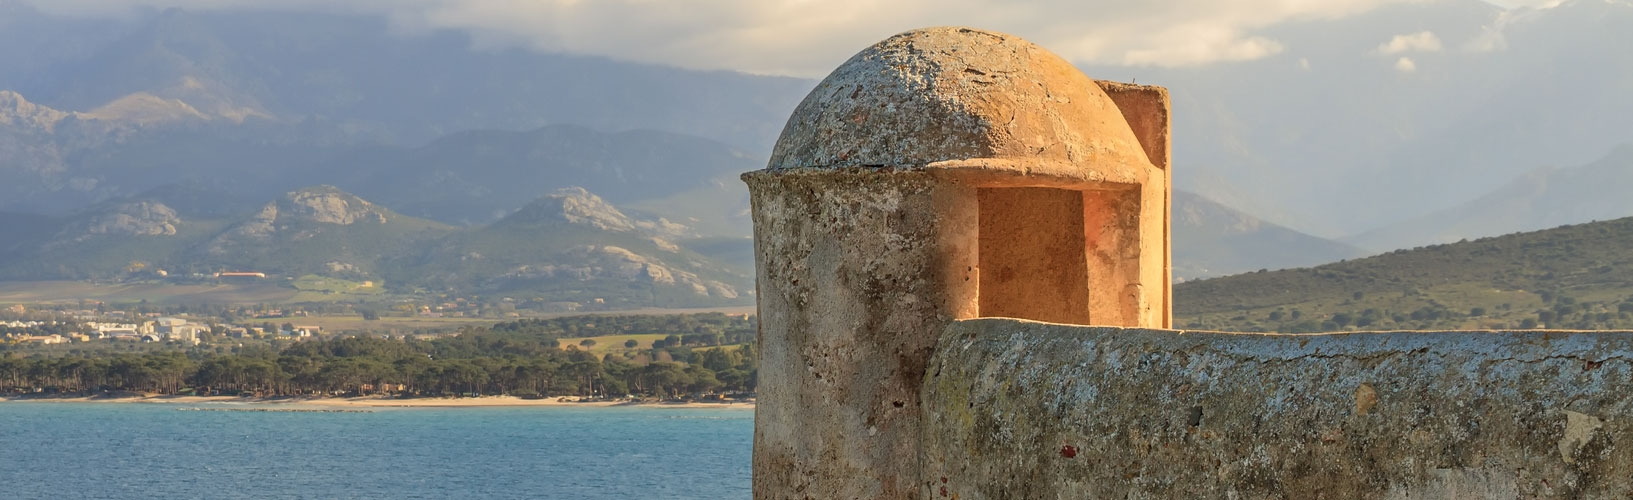 Calvi, Corsica: tower and panoramic view